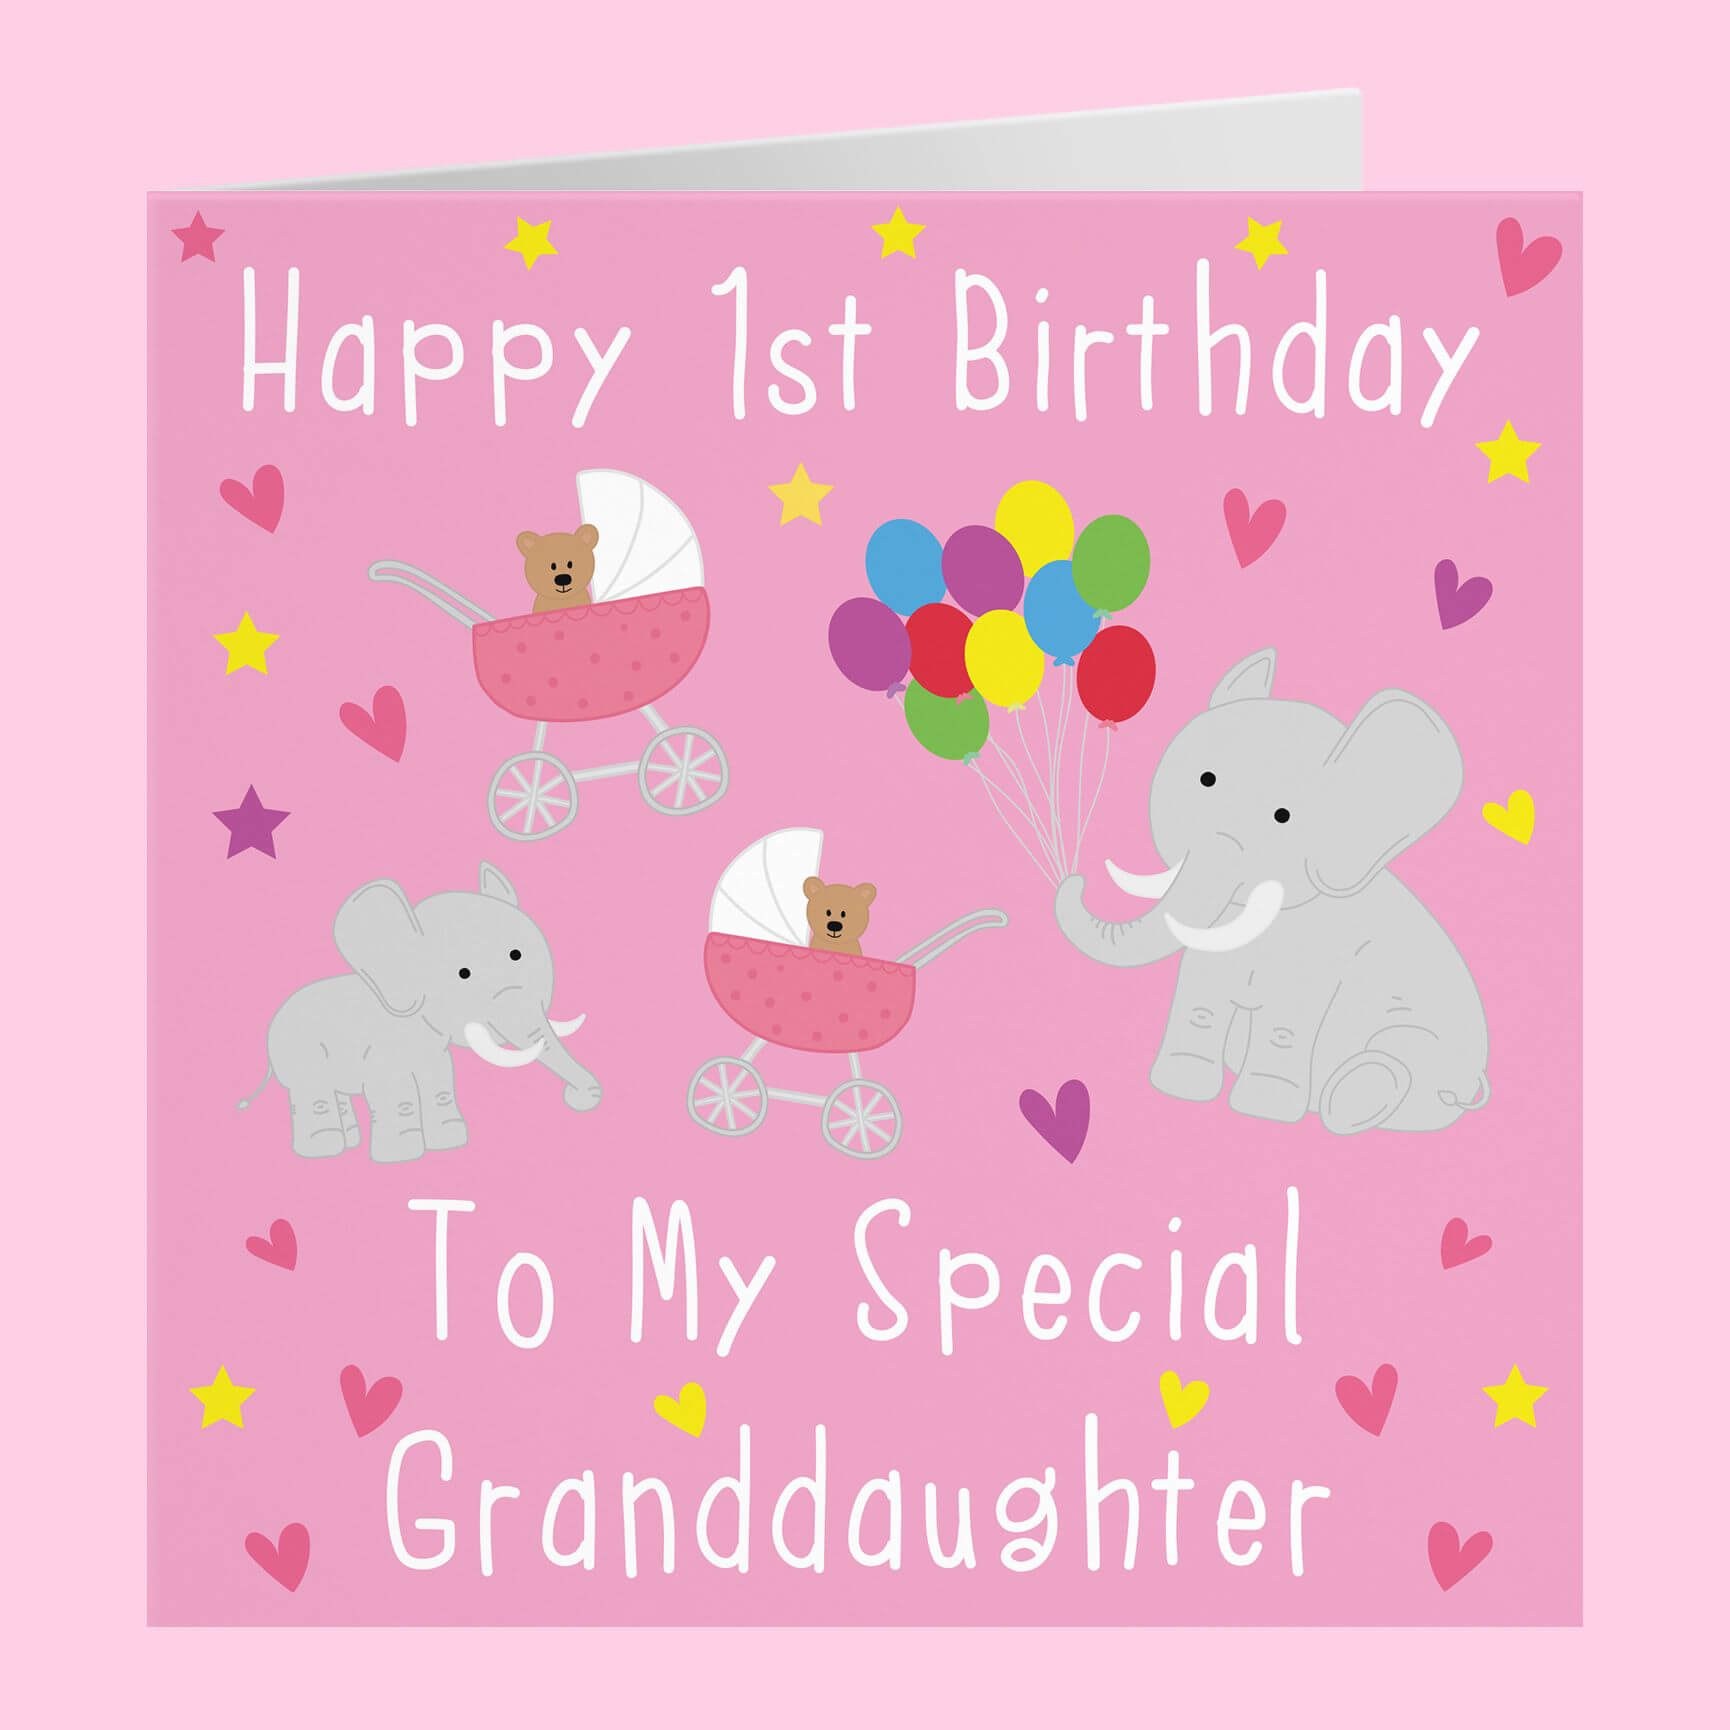 Dear Granddaughter On Your 1st Birthday.....Birthday Greetings Card 